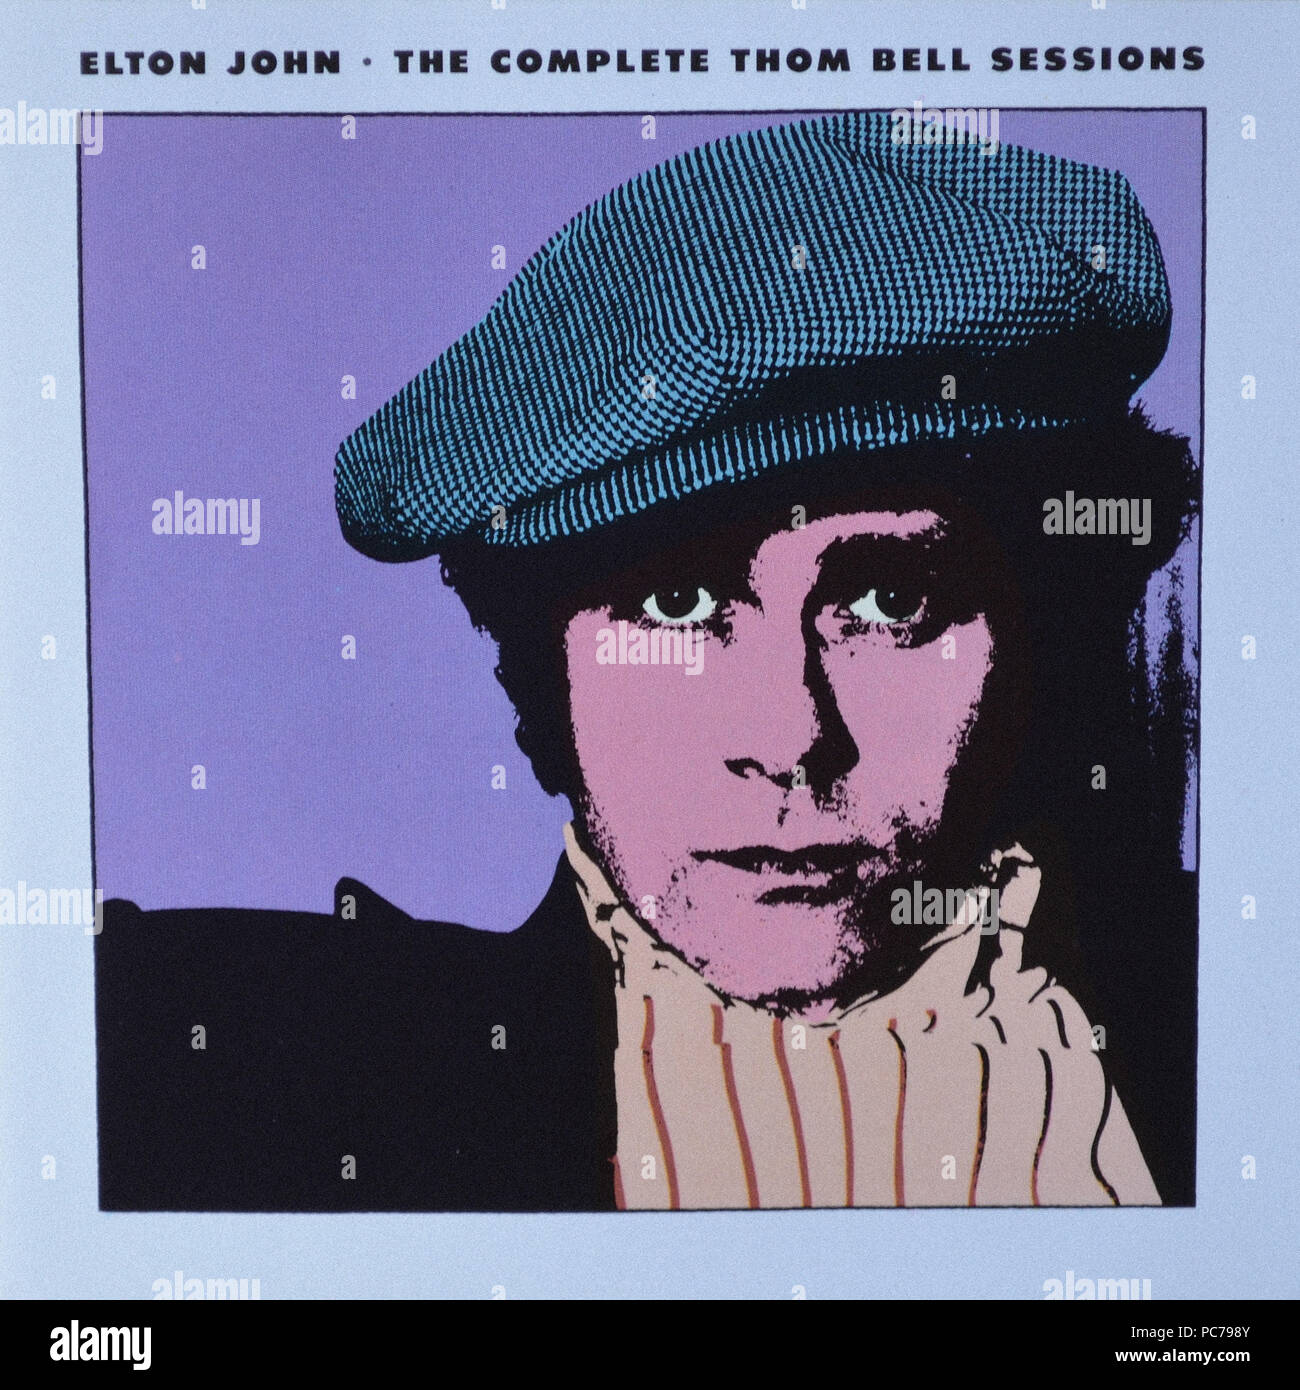 Elton John - The Complete Thom Bell Sessions - Vintage vinyl album